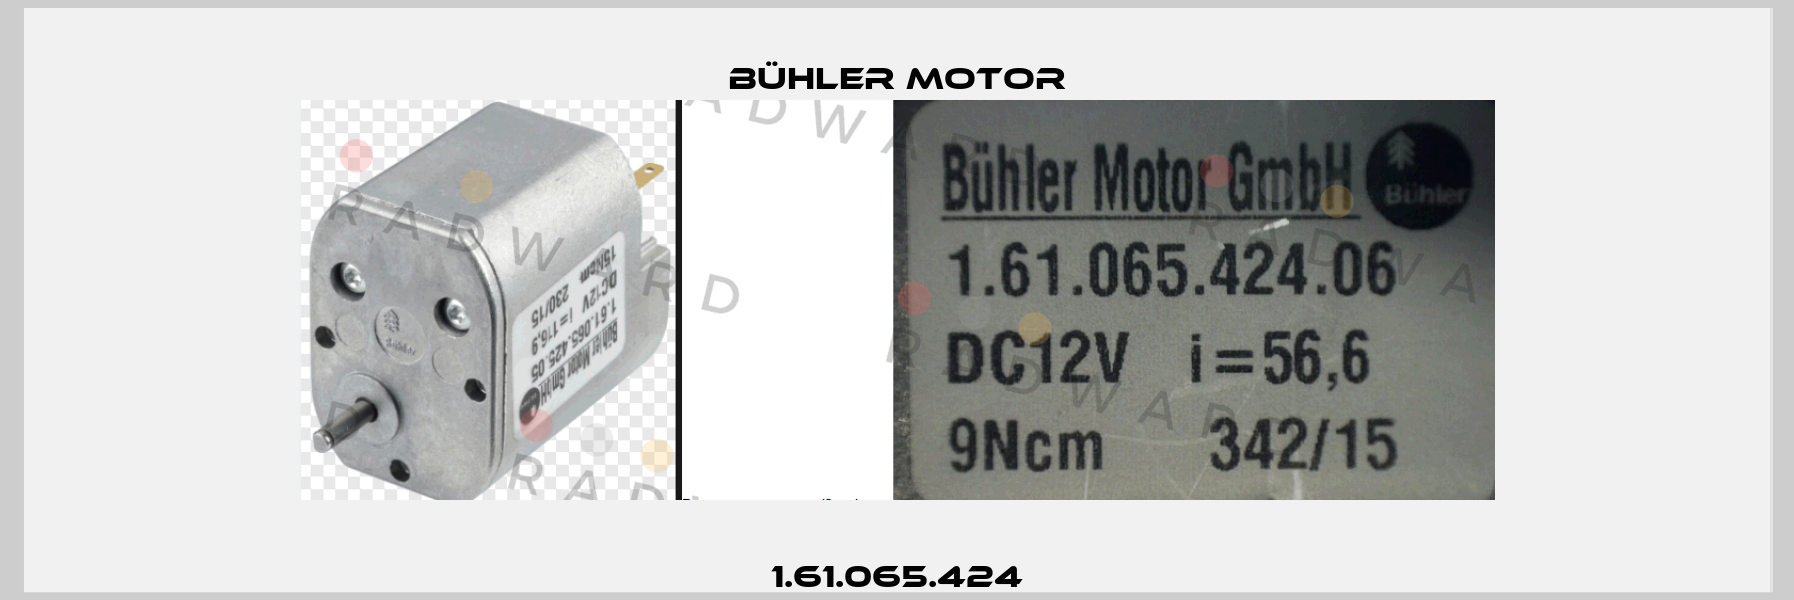 1.61.065.424 Bühler Motor